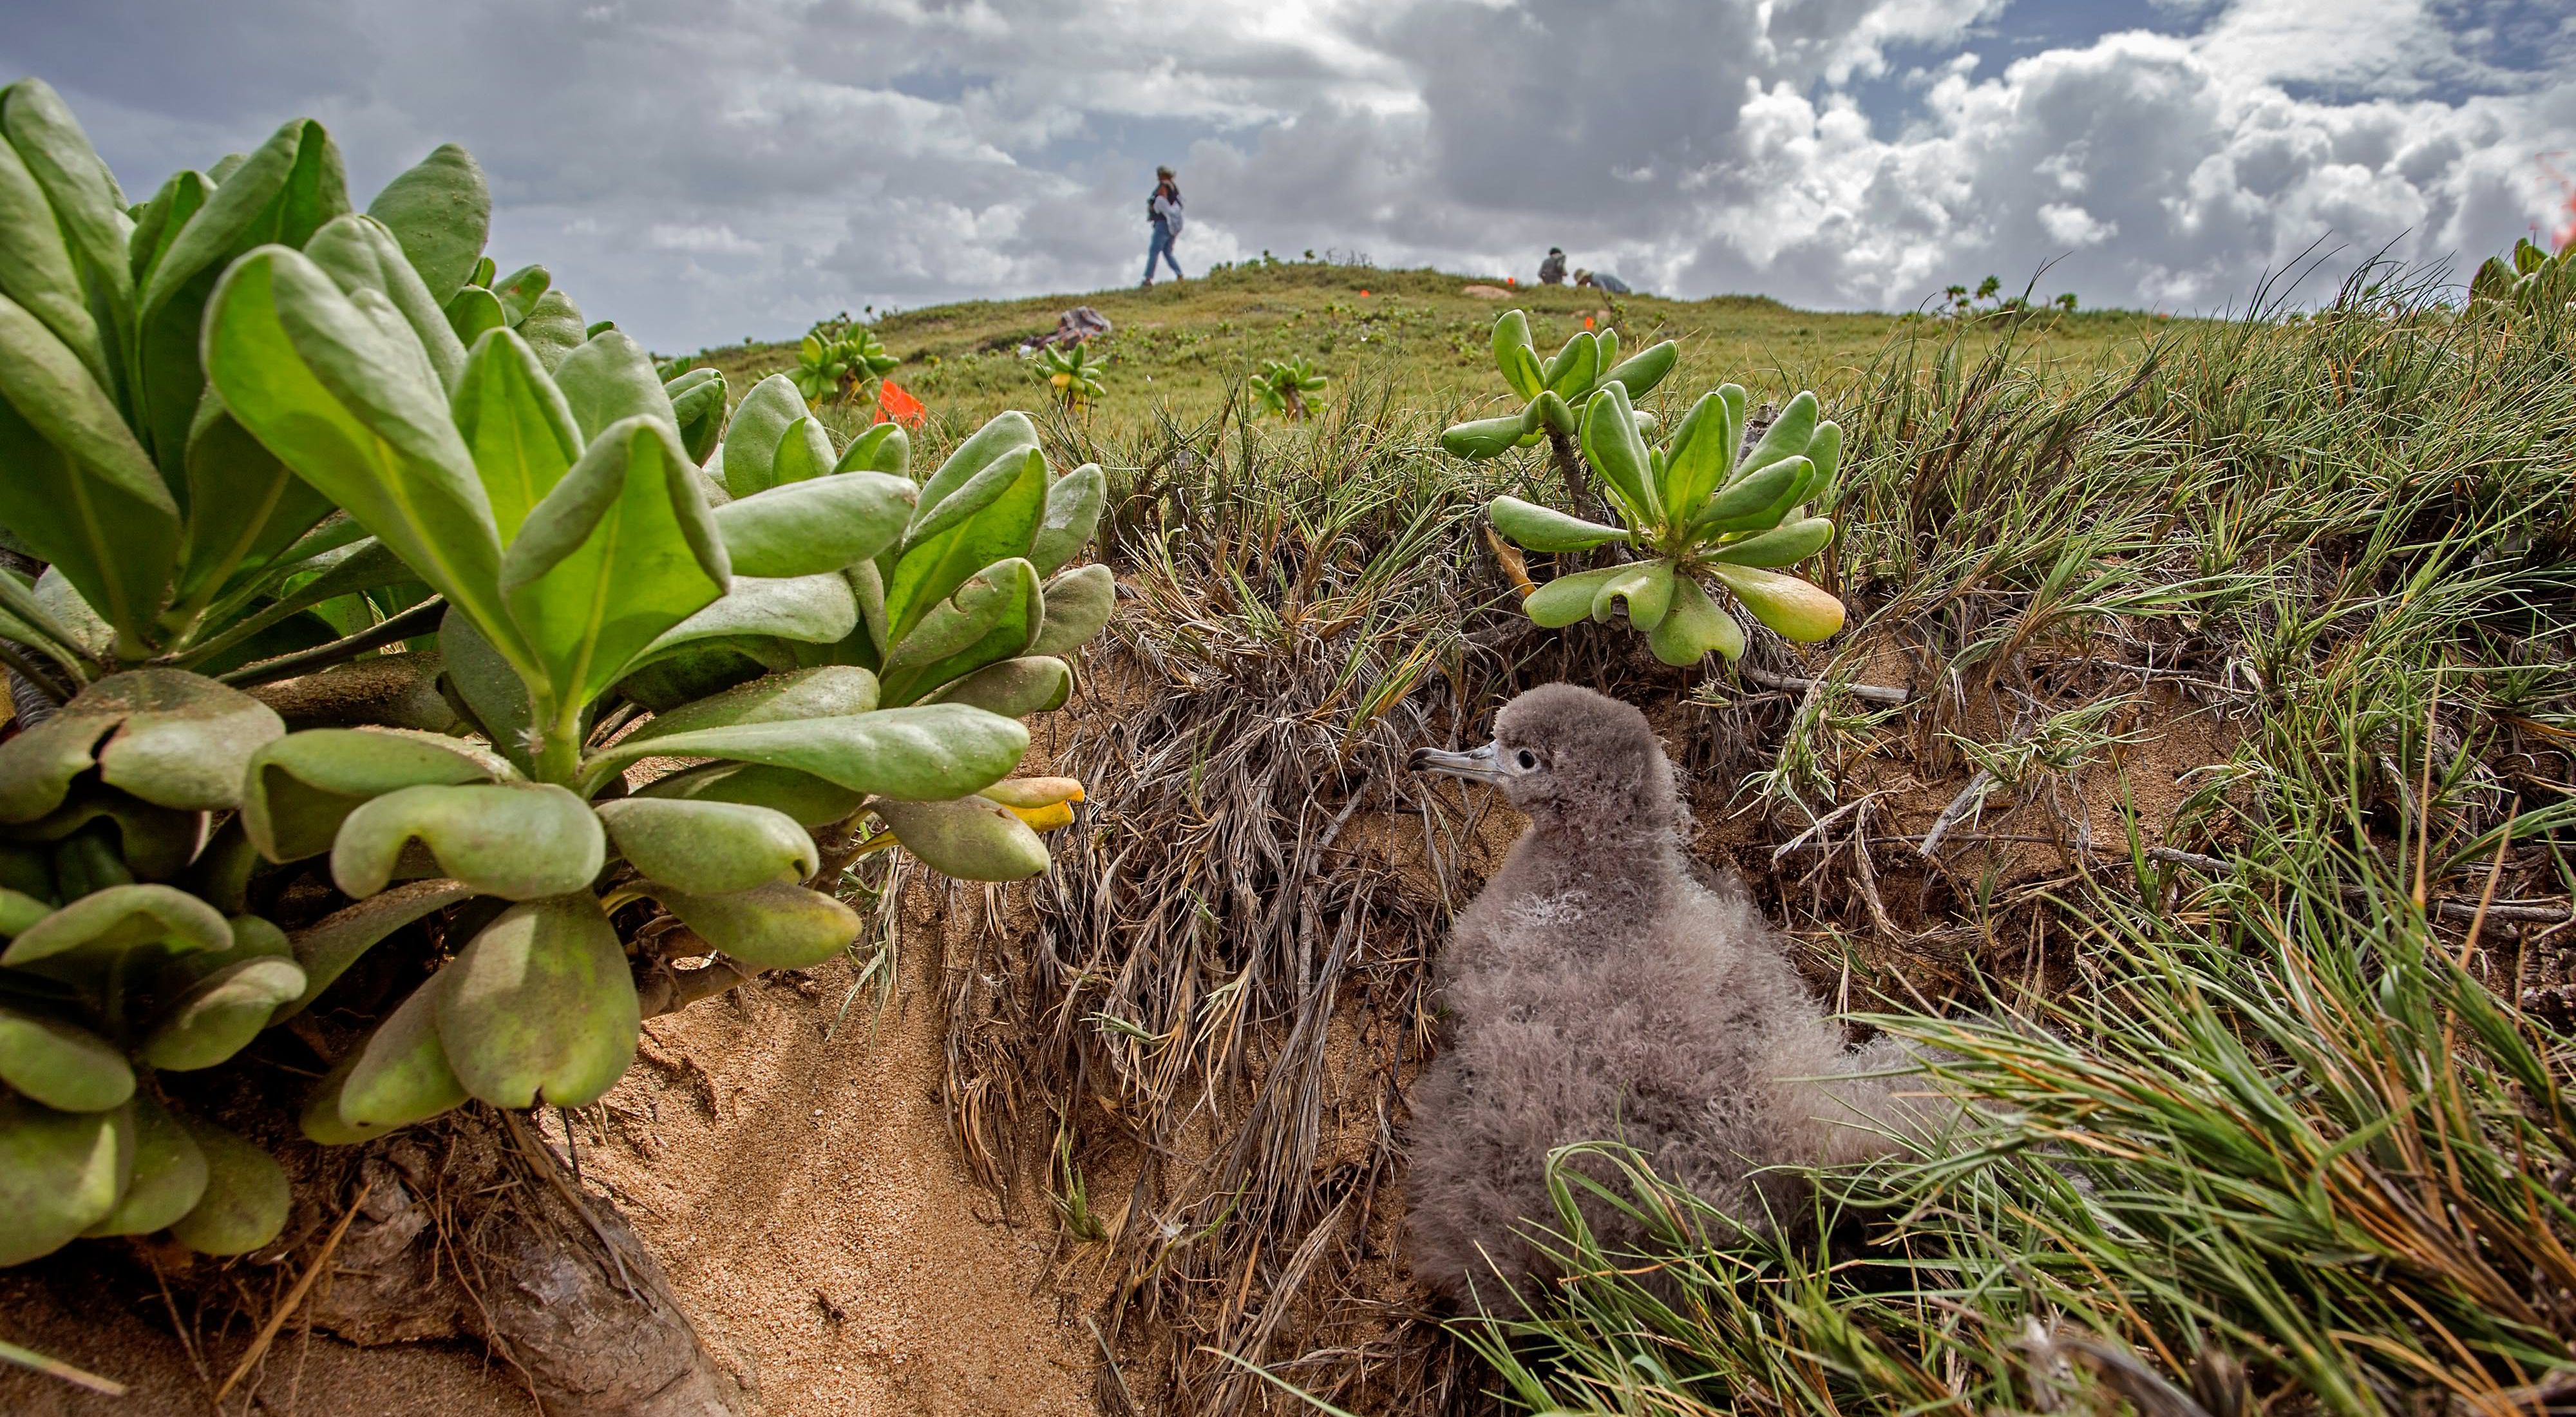 A fluffy gray chick hides in a grassy area.